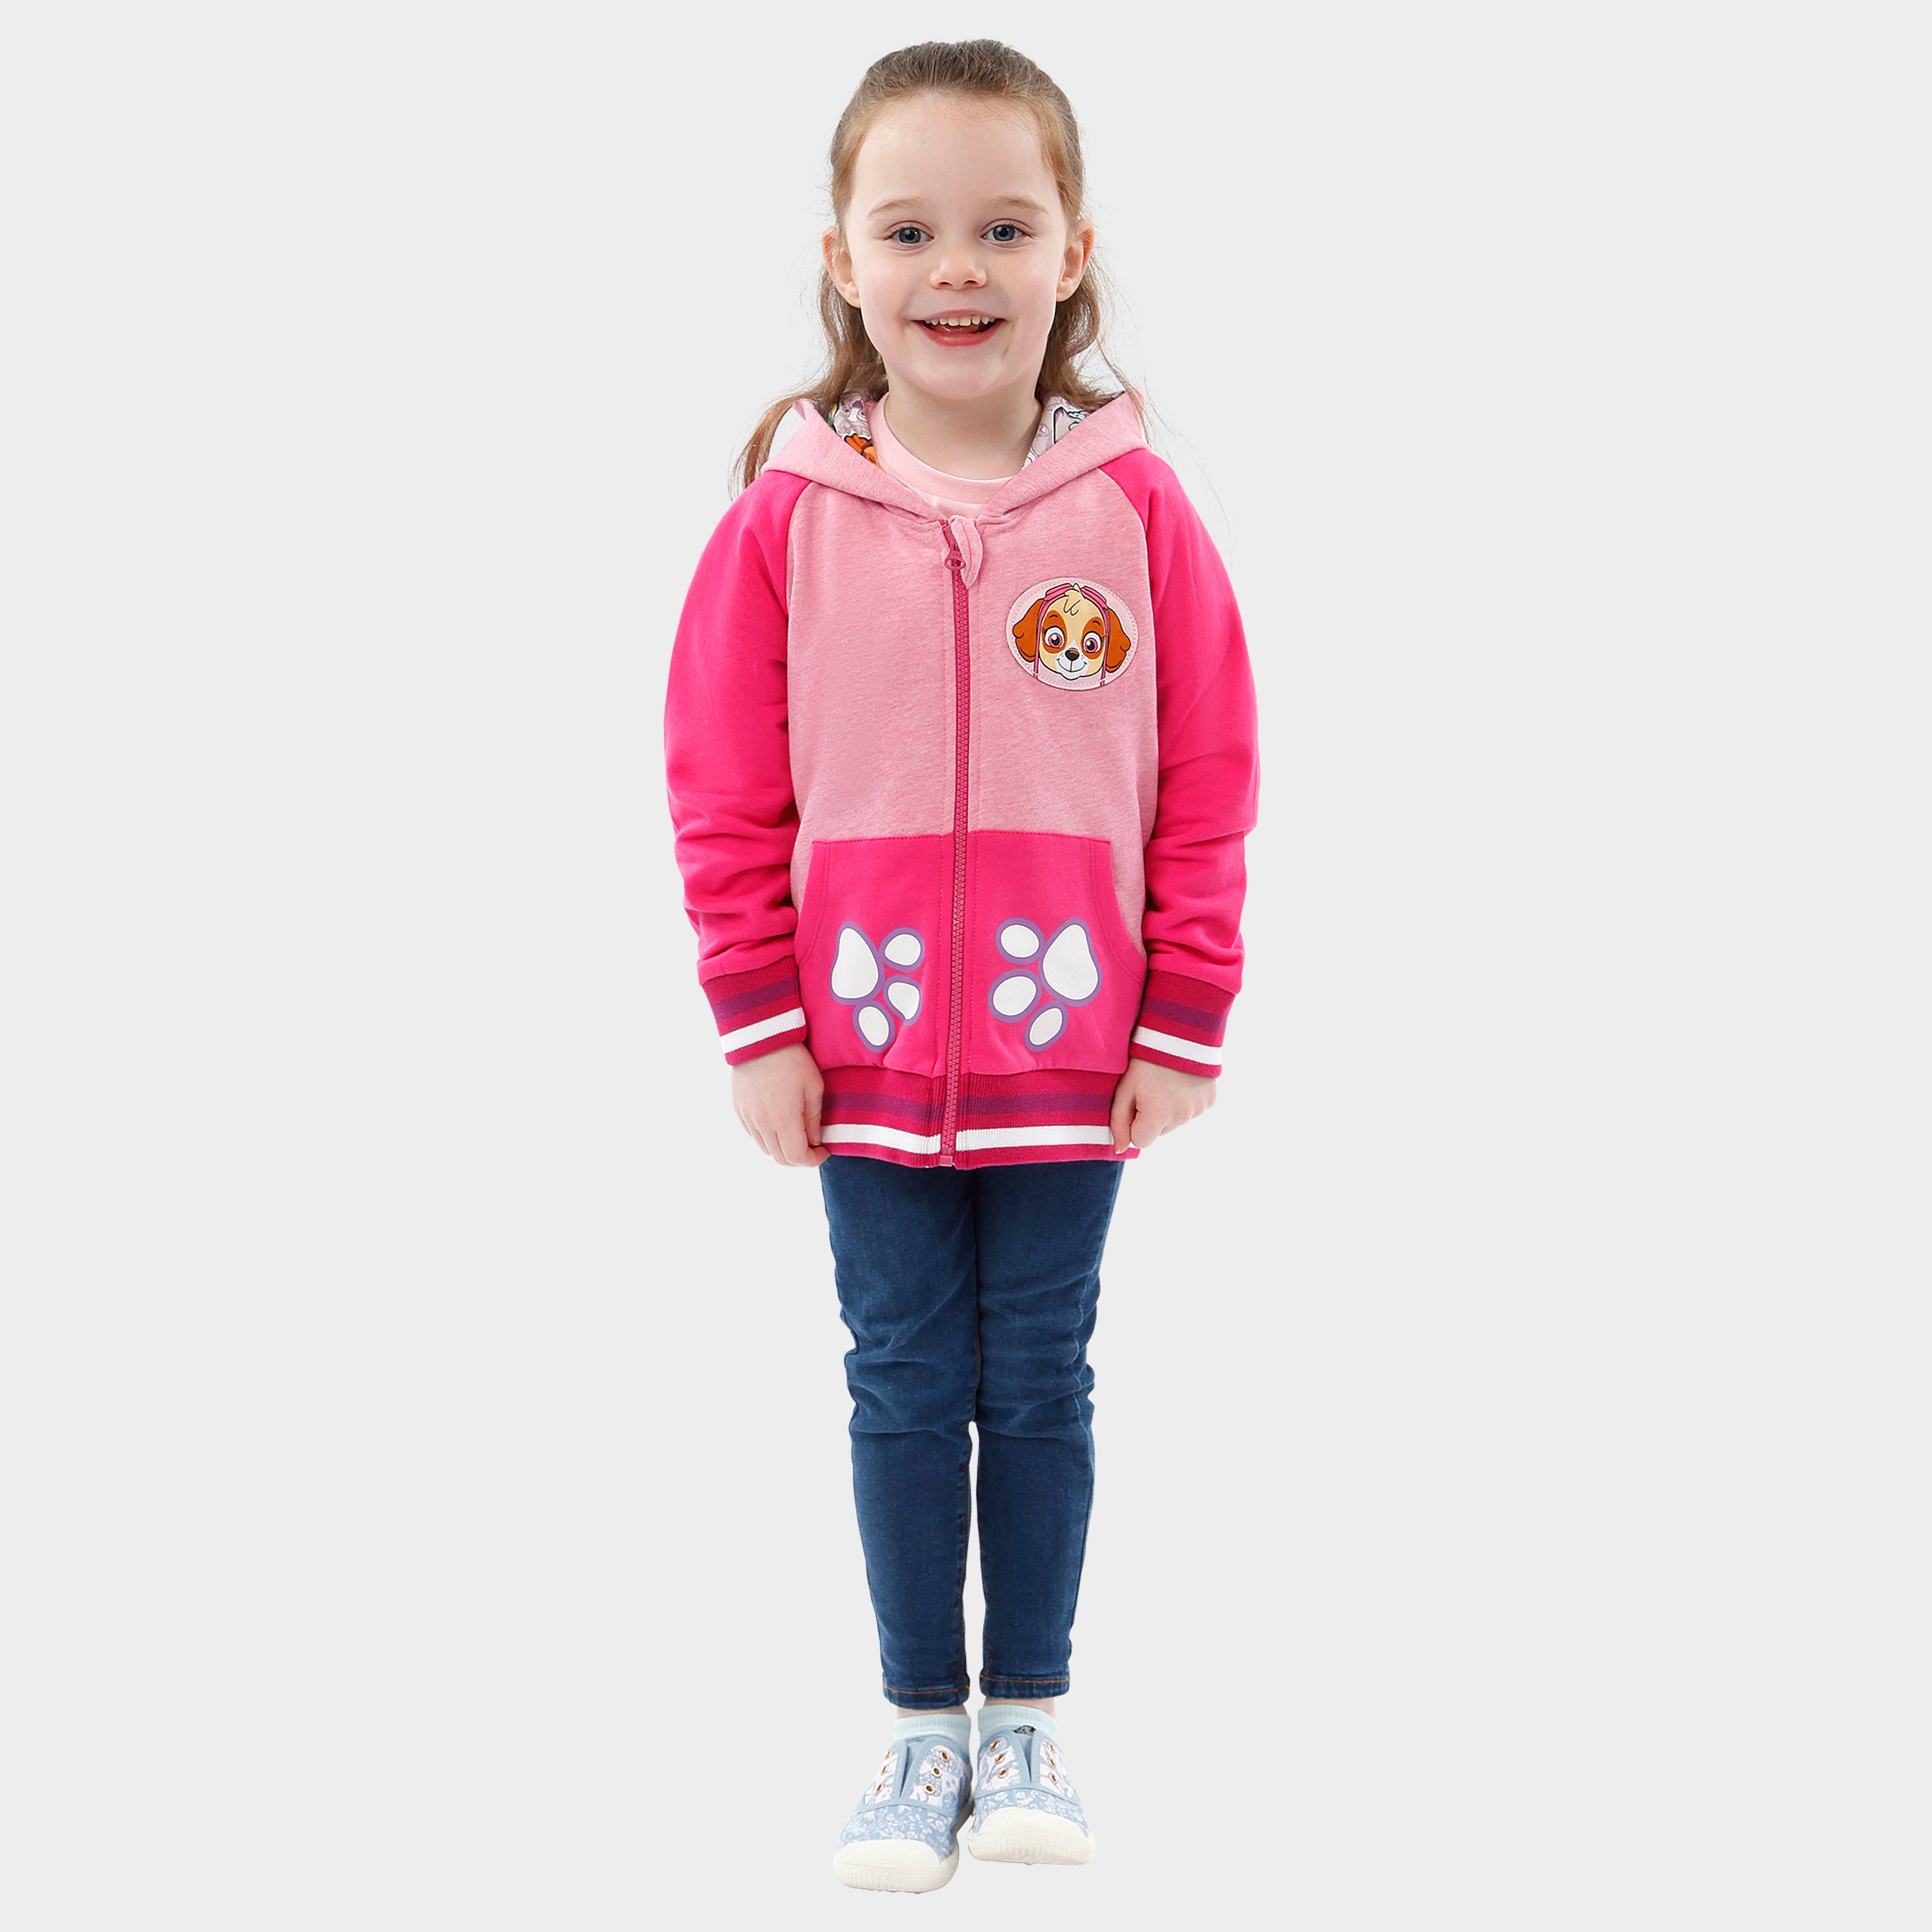 Buy Girls Paw Patrol Hoodie | Kids | Character.com Official Merchandise